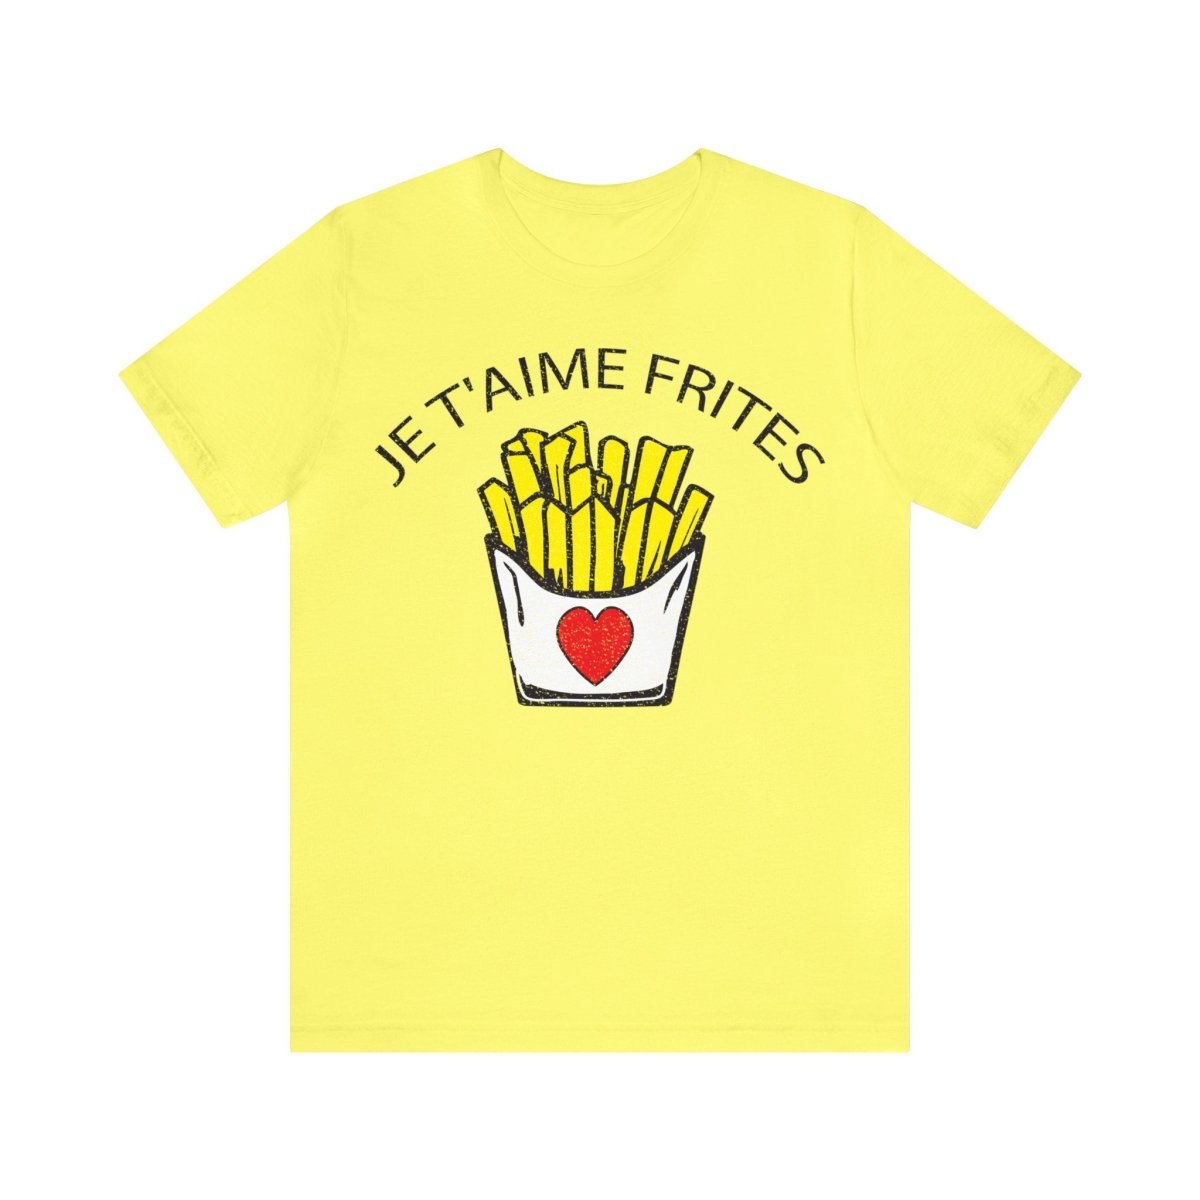 French Fries Love Premium T-Shirt, Favorite Food